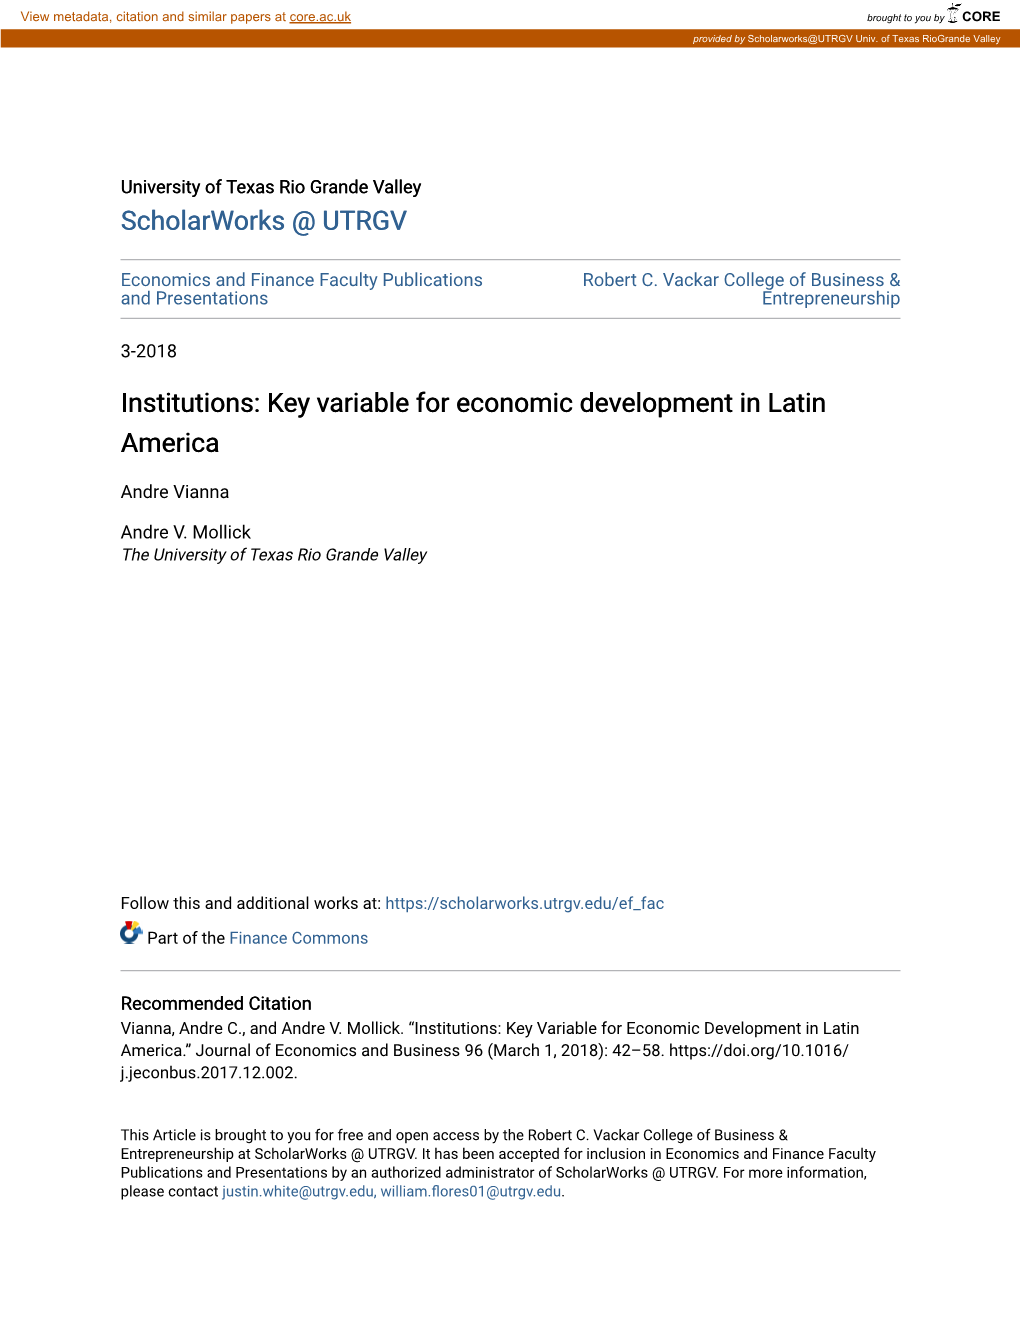 Institutions: Key Variable for Economic Development in Latin America